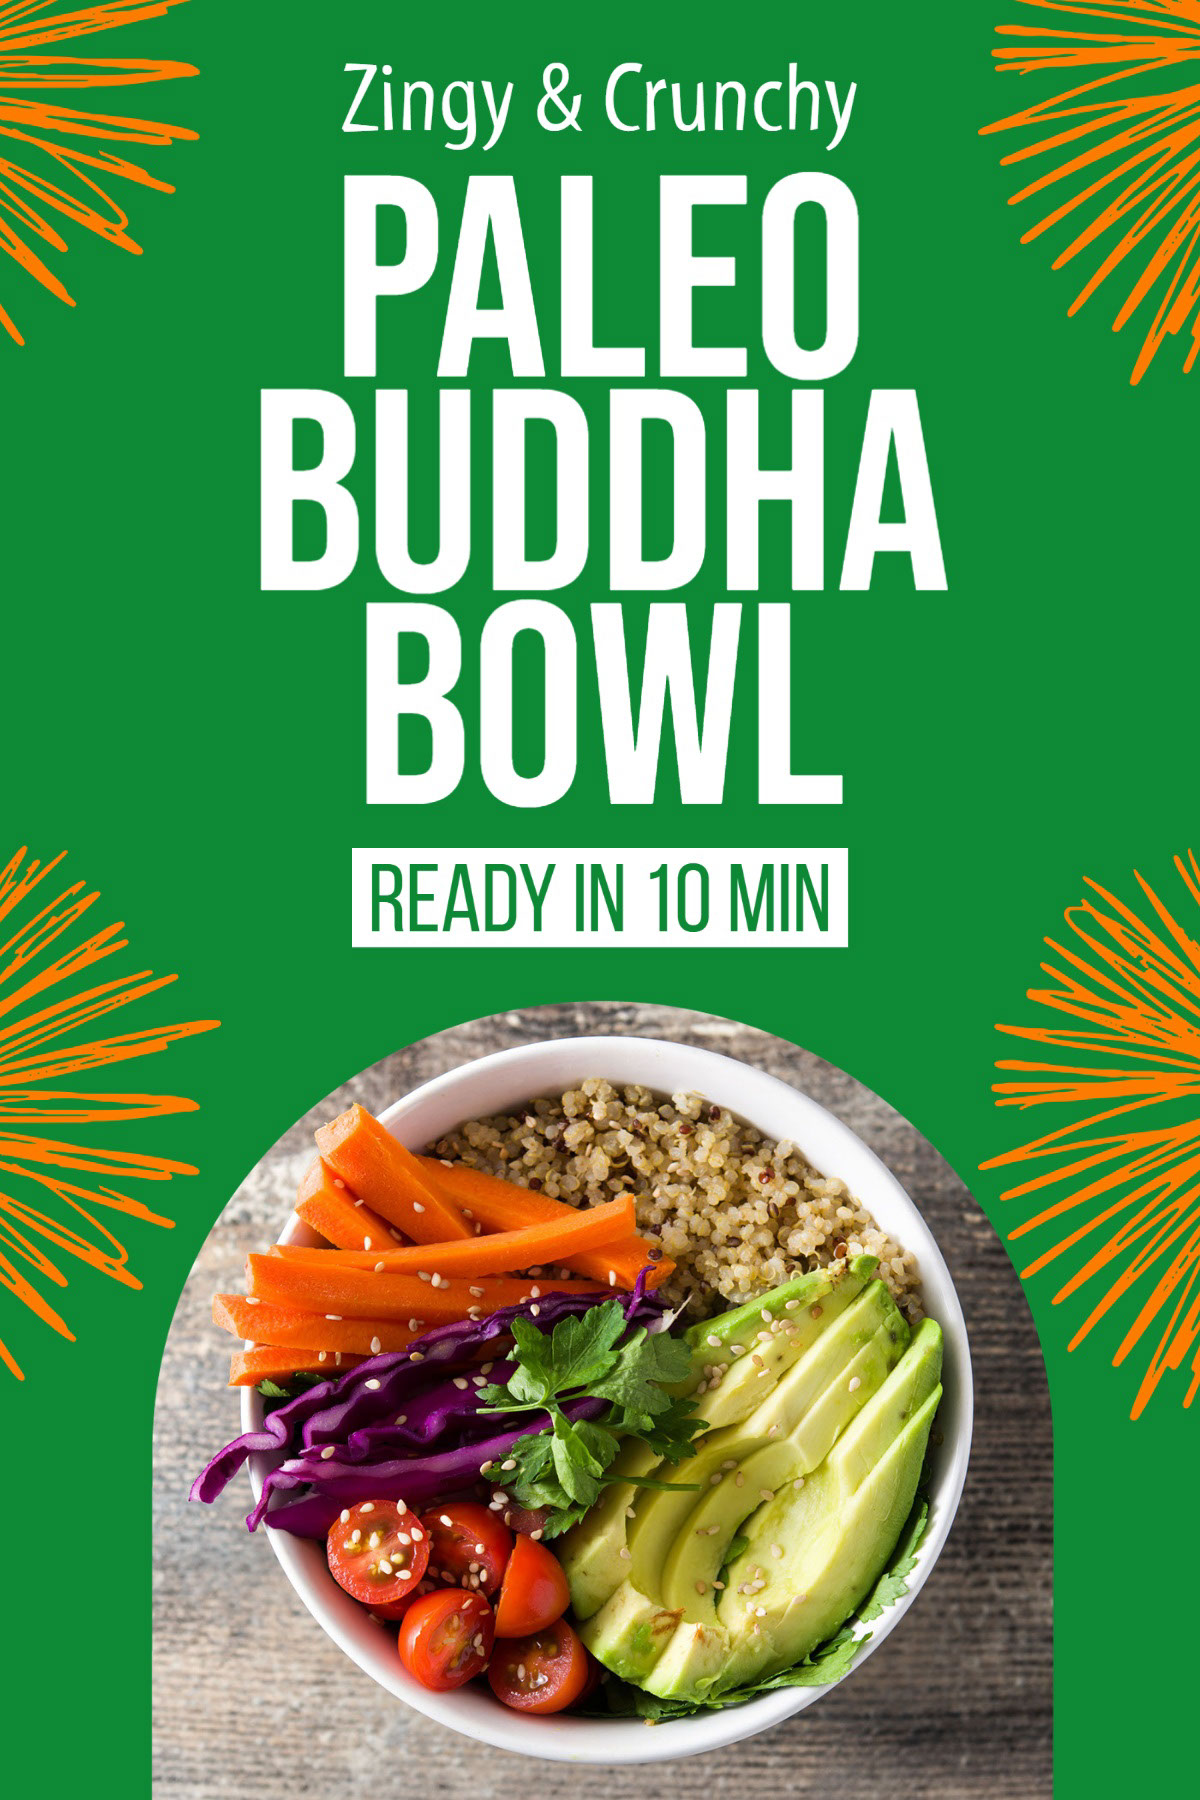 Green Buddha Bowl Recipe Pinterest Post Paleo Buddha Bowl Zingy & Crunchy Ready in 10 Min